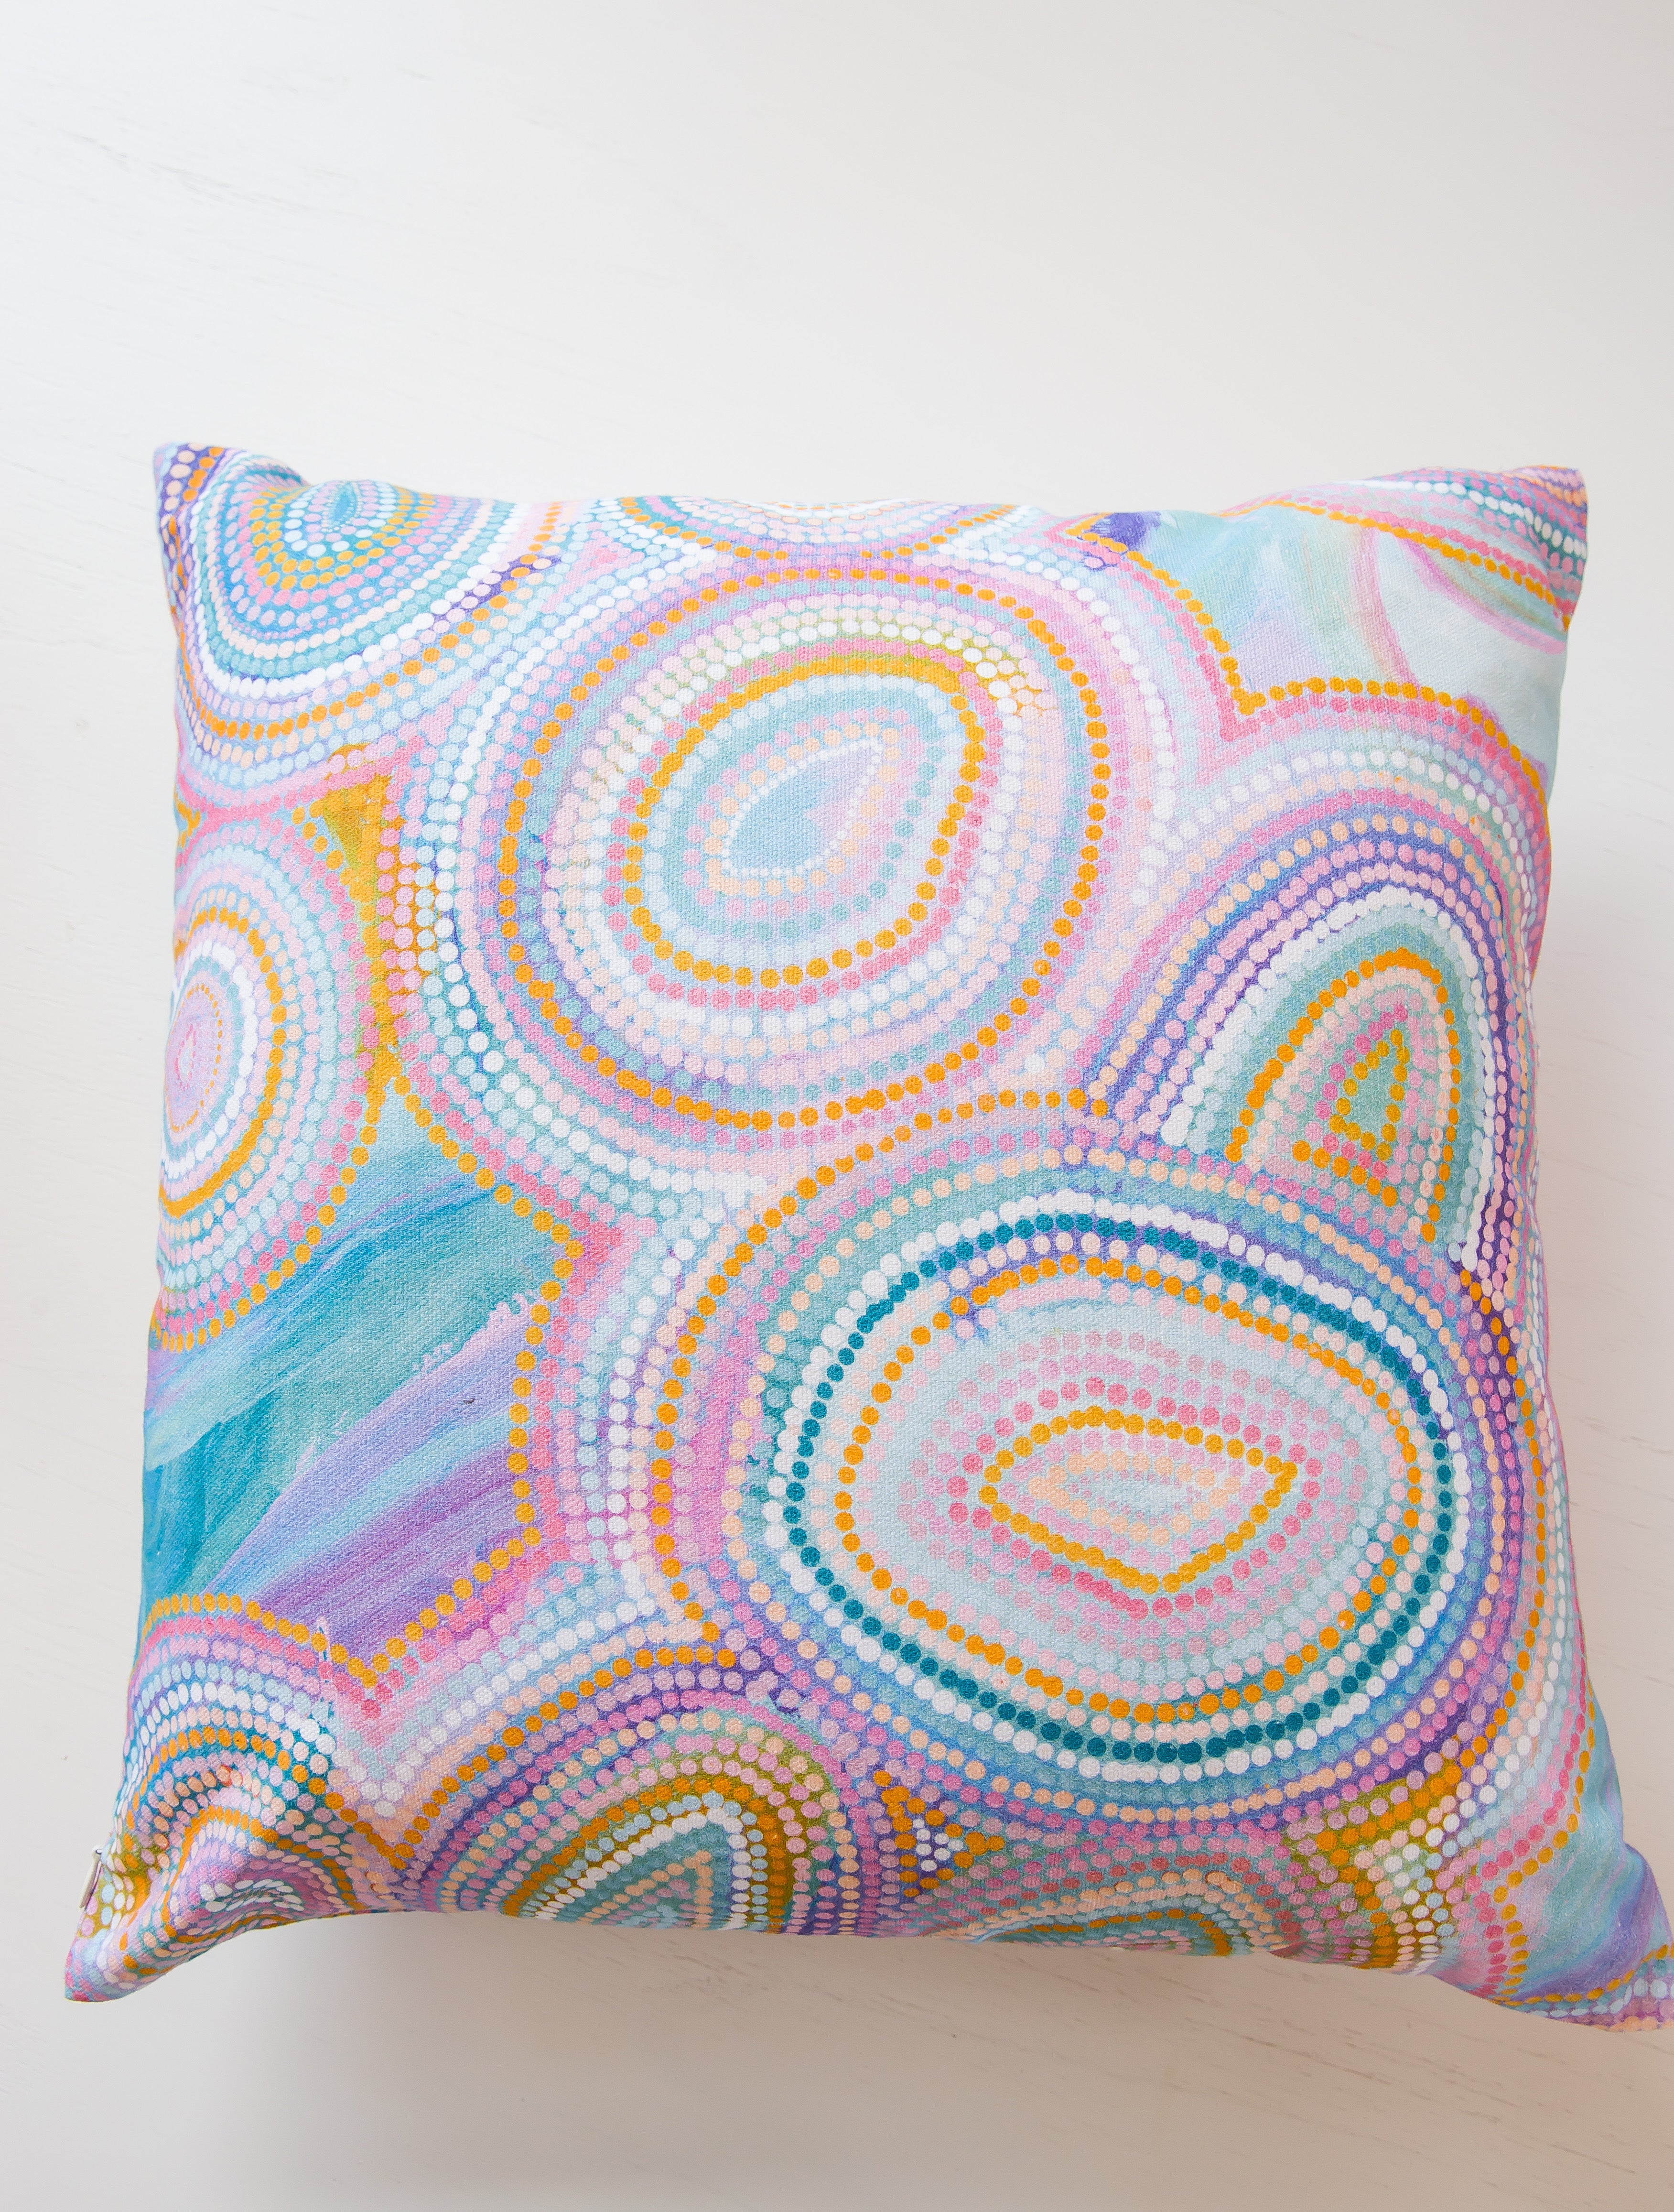 Ocean Dreaming II - Organic Art cushion